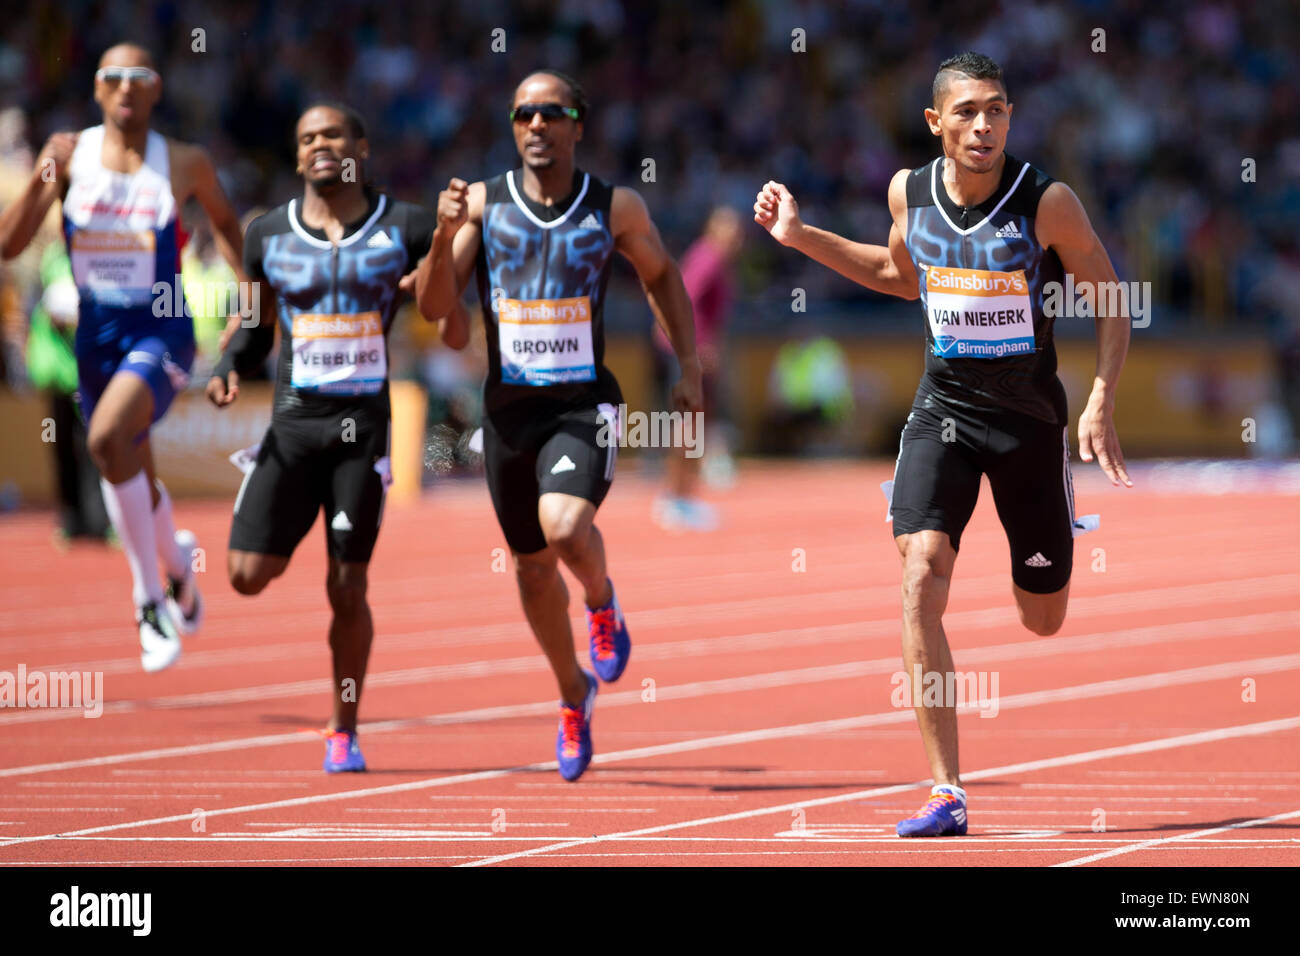 Wayde VAN NIEKERK, Christopher BROWN & David VERBURG, 300m Männer, IAAF Diamond League 2015, Alexander Stadium, Birmingham, UK, 7. Juni 2015. Stockfoto